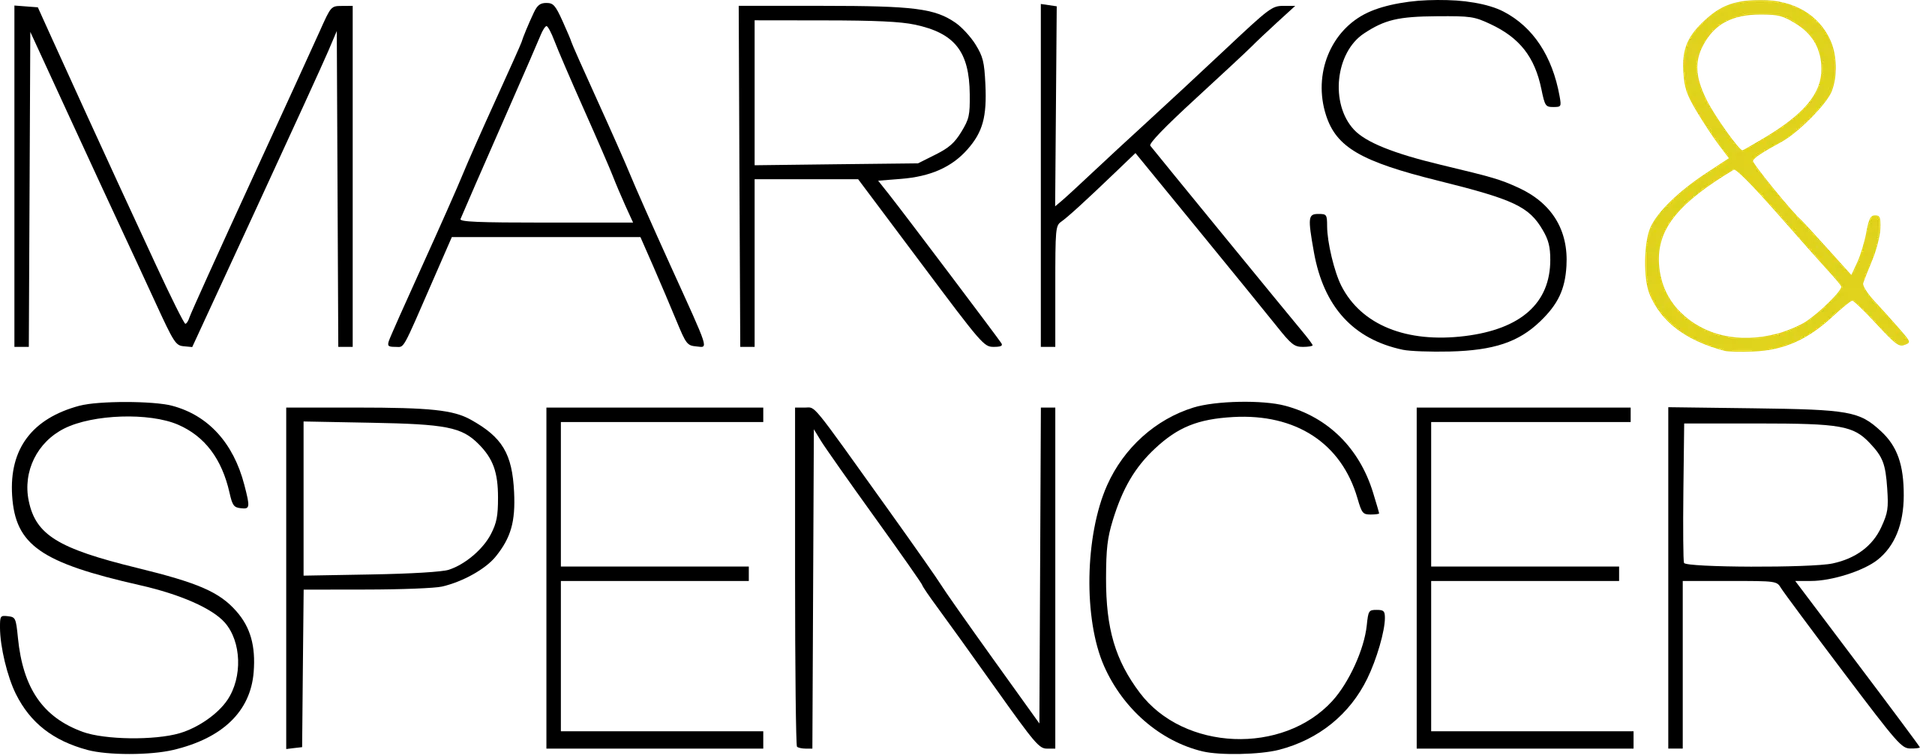 MARKS & SPENCER logo. Current catalogue